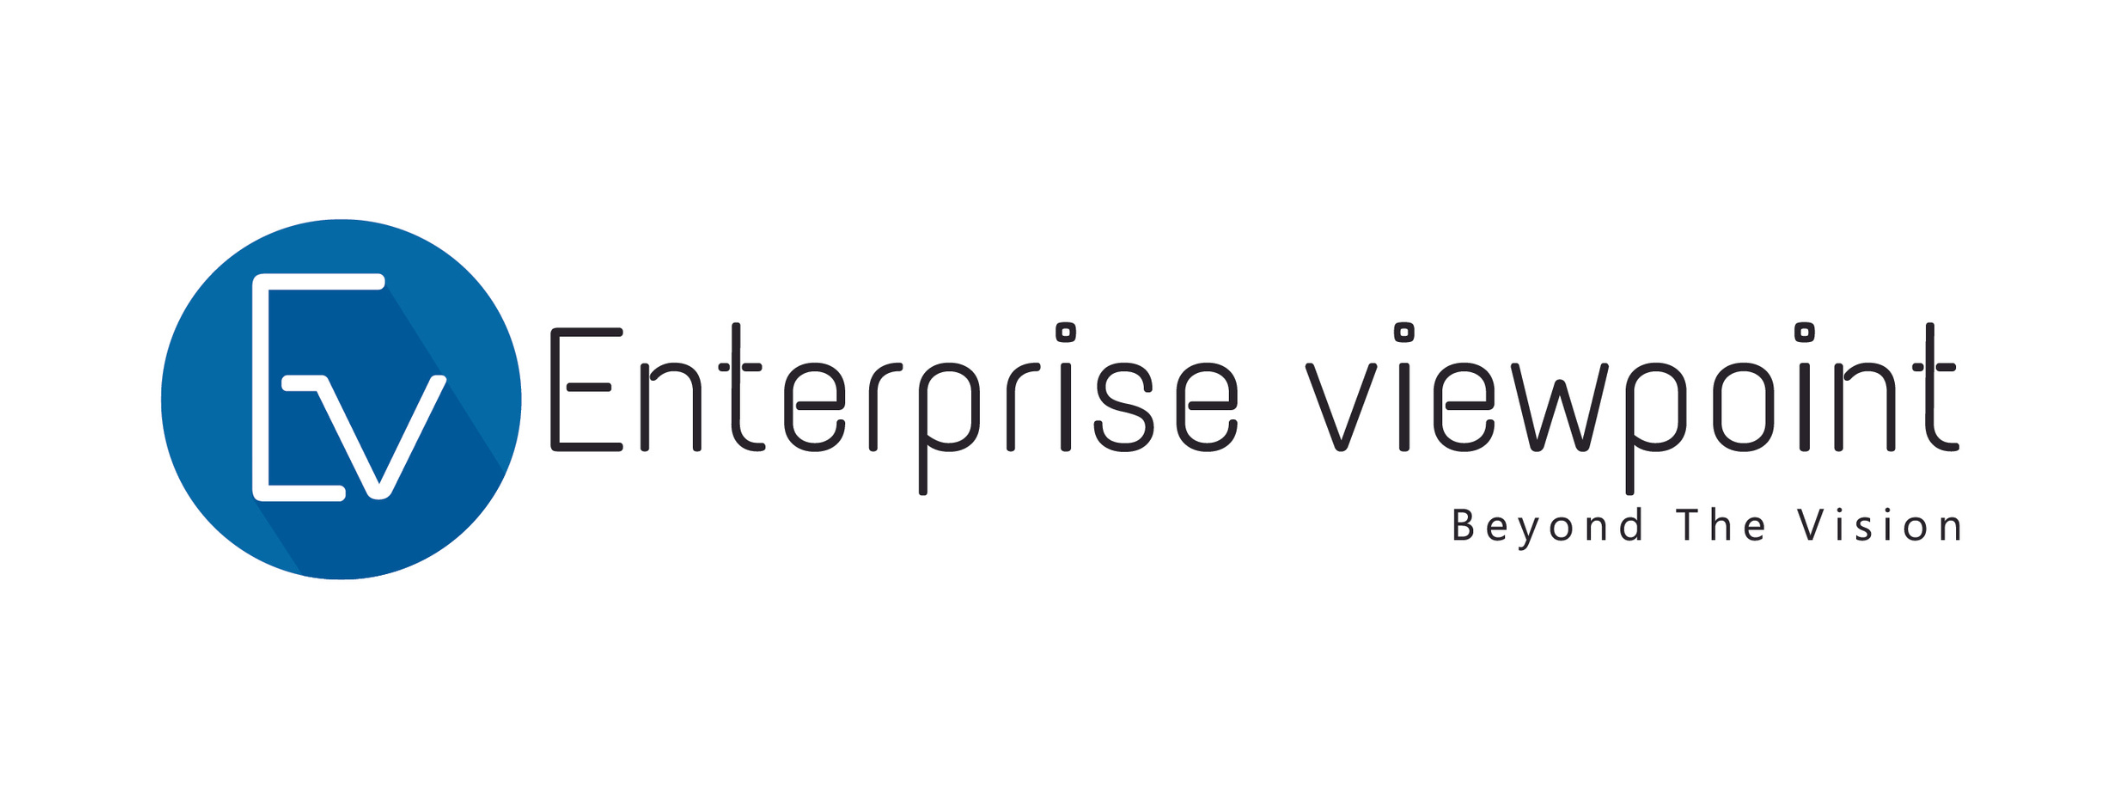 Enterprise Viewpoint